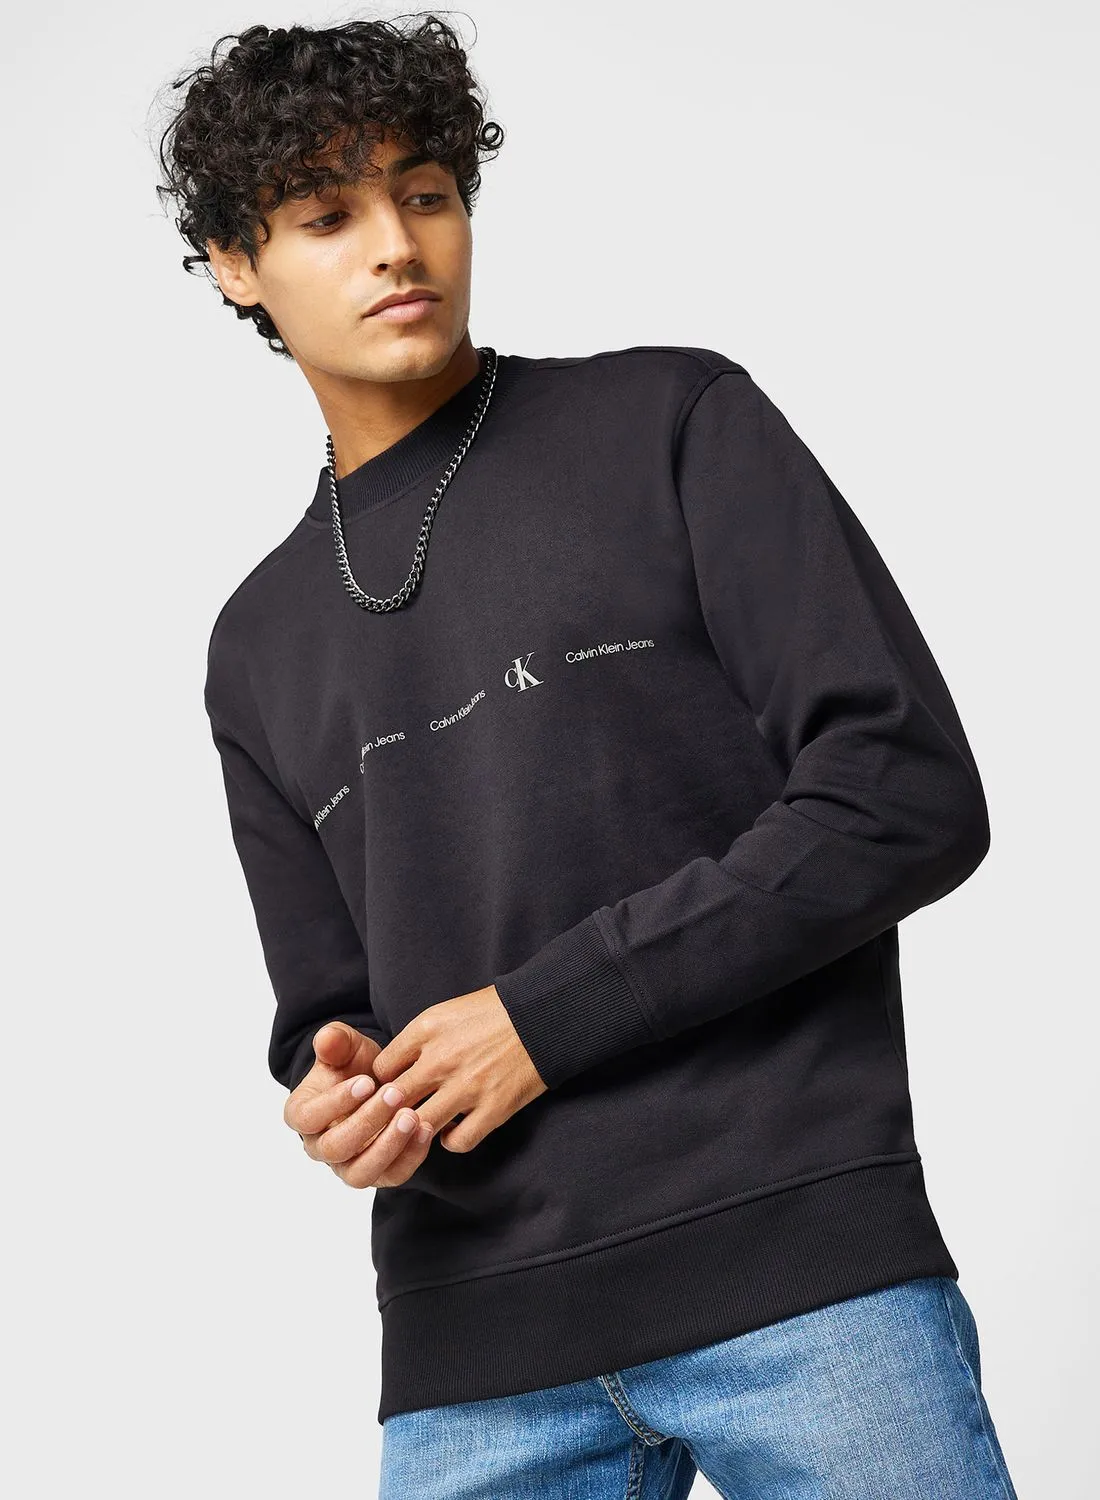 Calvin Klein Jeans Logo Crew Neck Sweatshirt